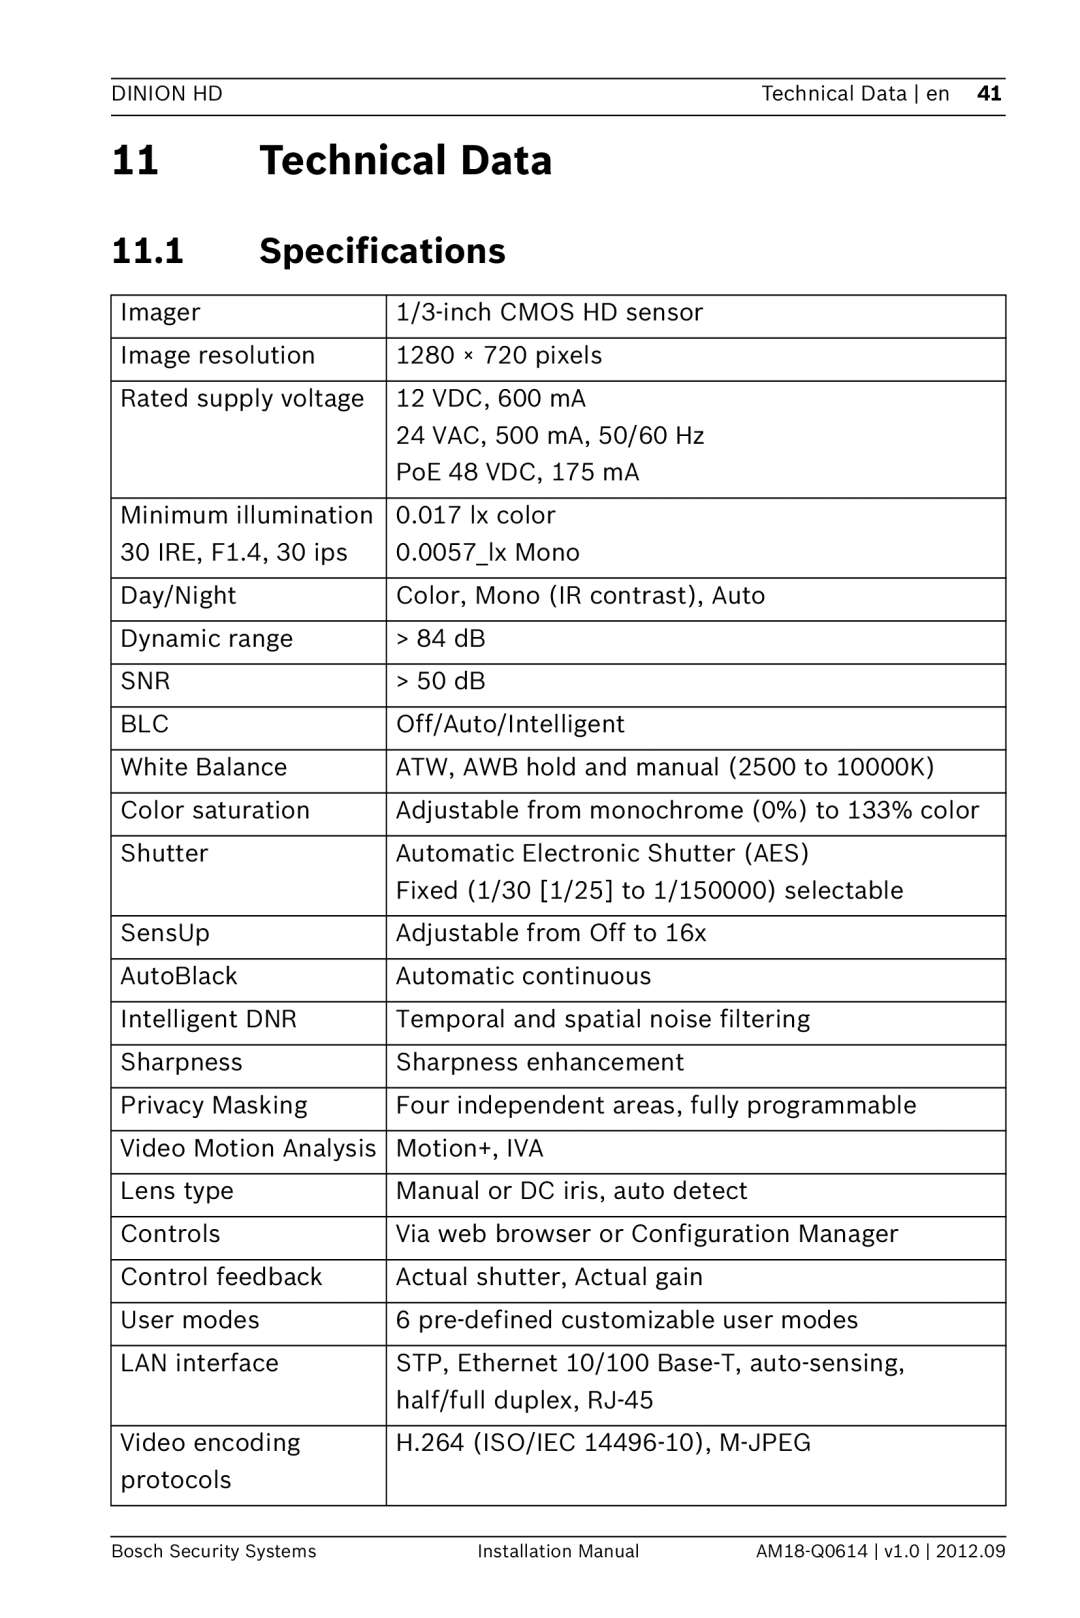 Bosch Appliances NBN-733 installation manual Technical Data, 11.1Specifications 